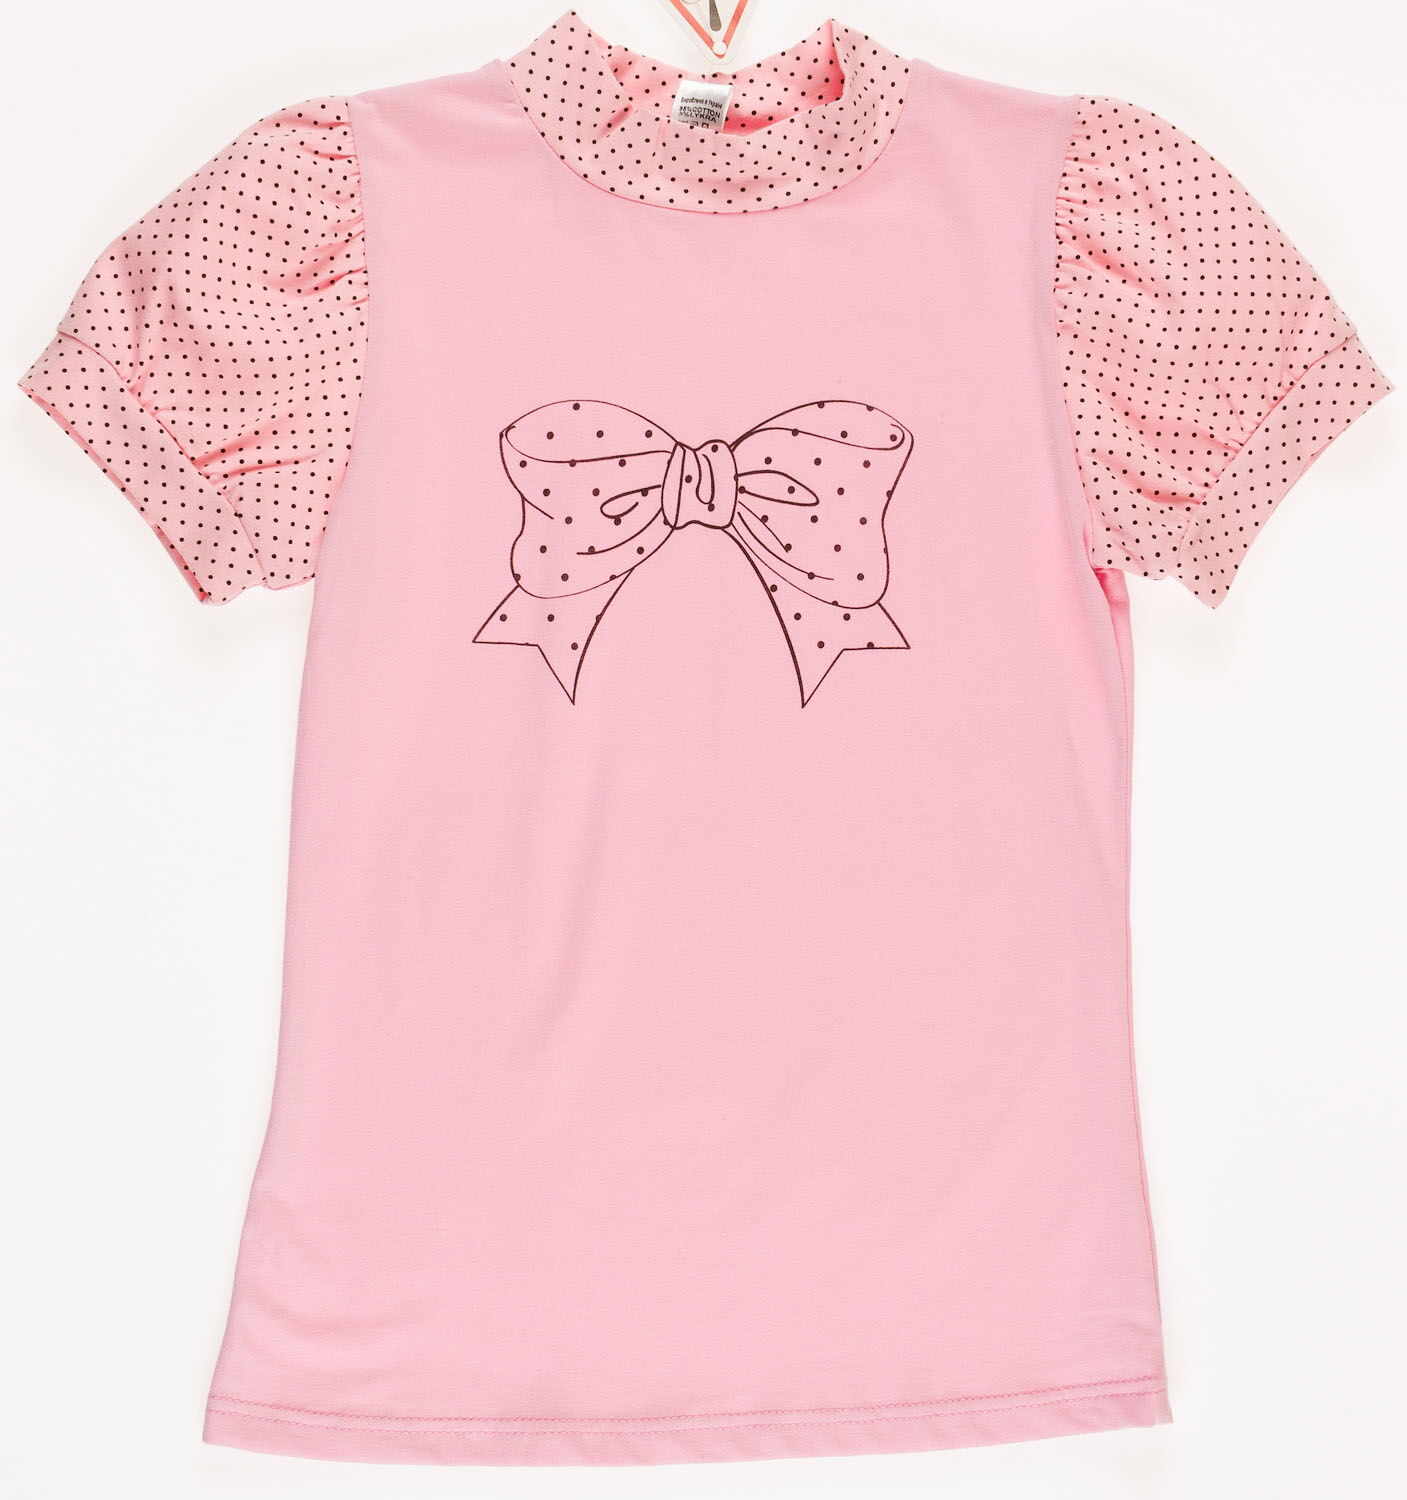 Блузка трикотажная с коротким рукавом Valeri tex Бант розовая 1711-55-242 - цена